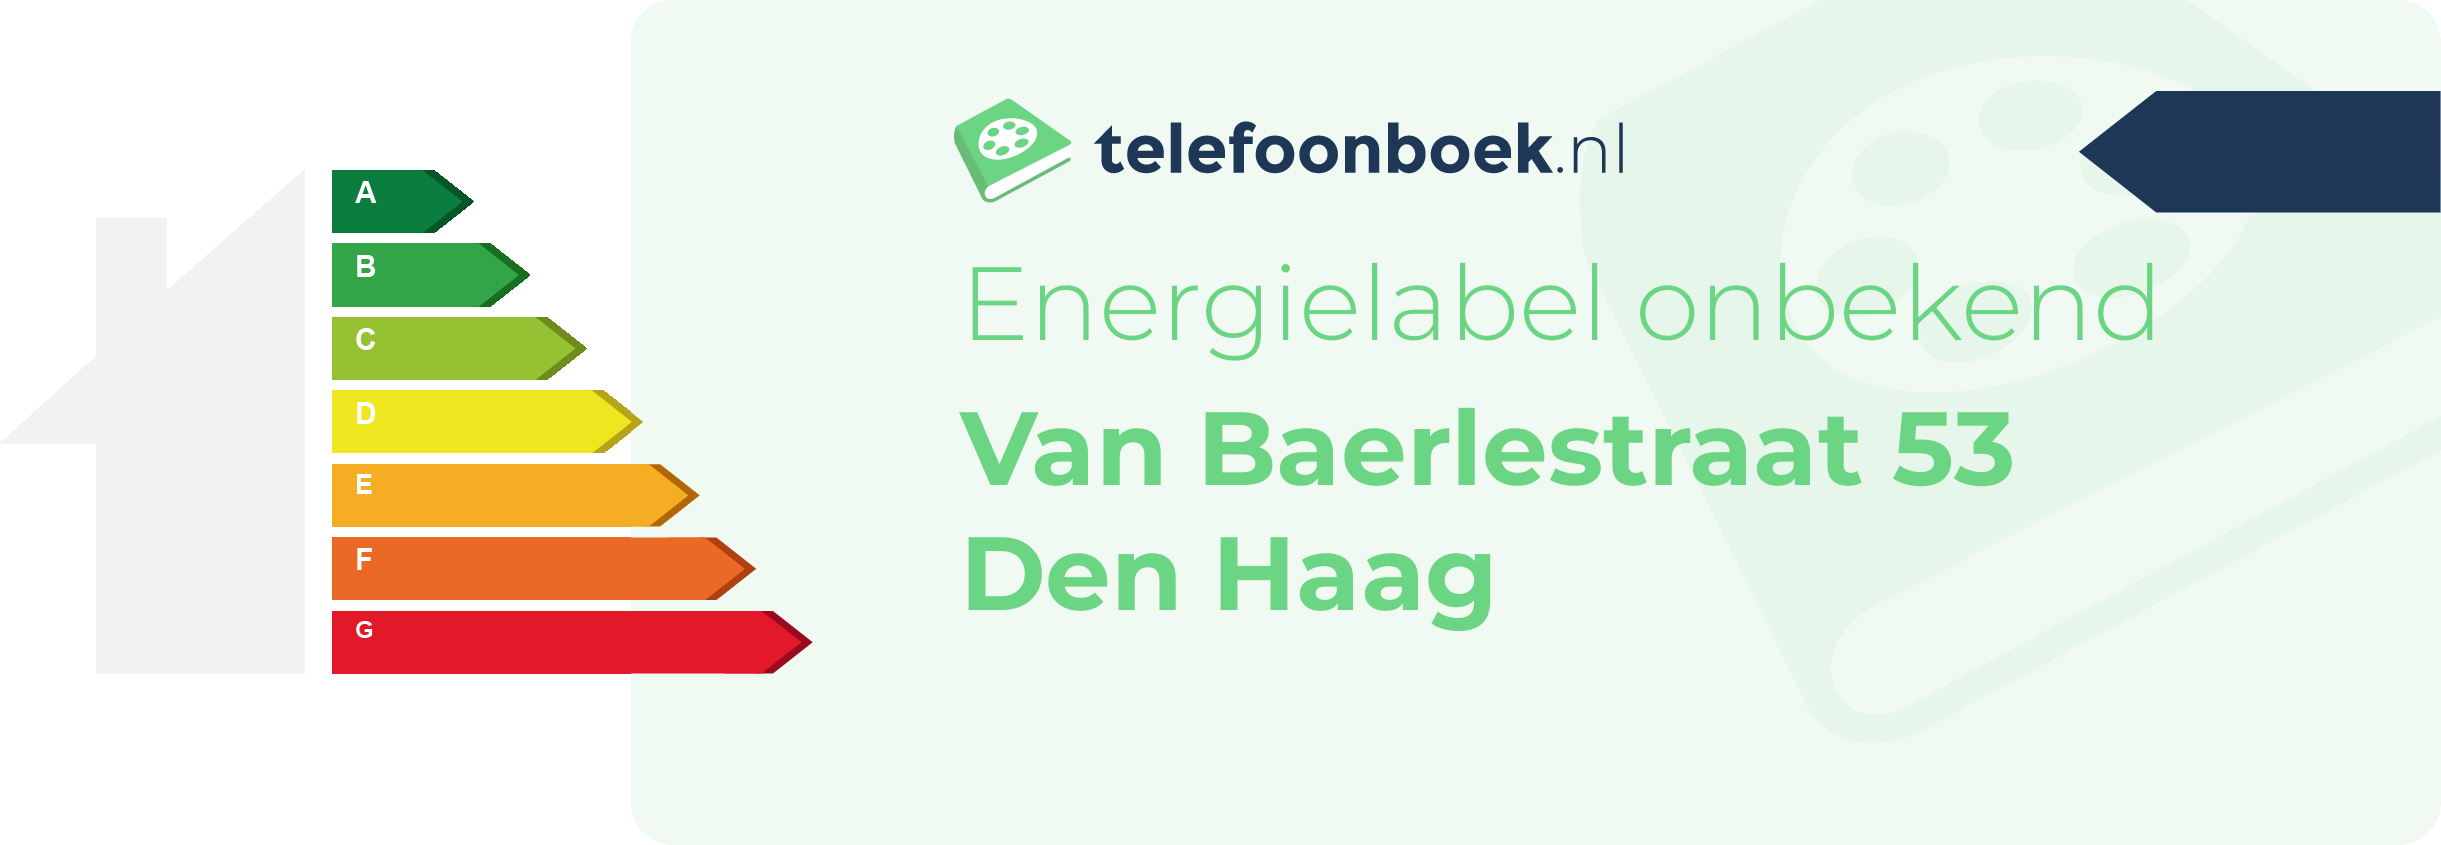 Energielabel Van Baerlestraat 53 Den Haag